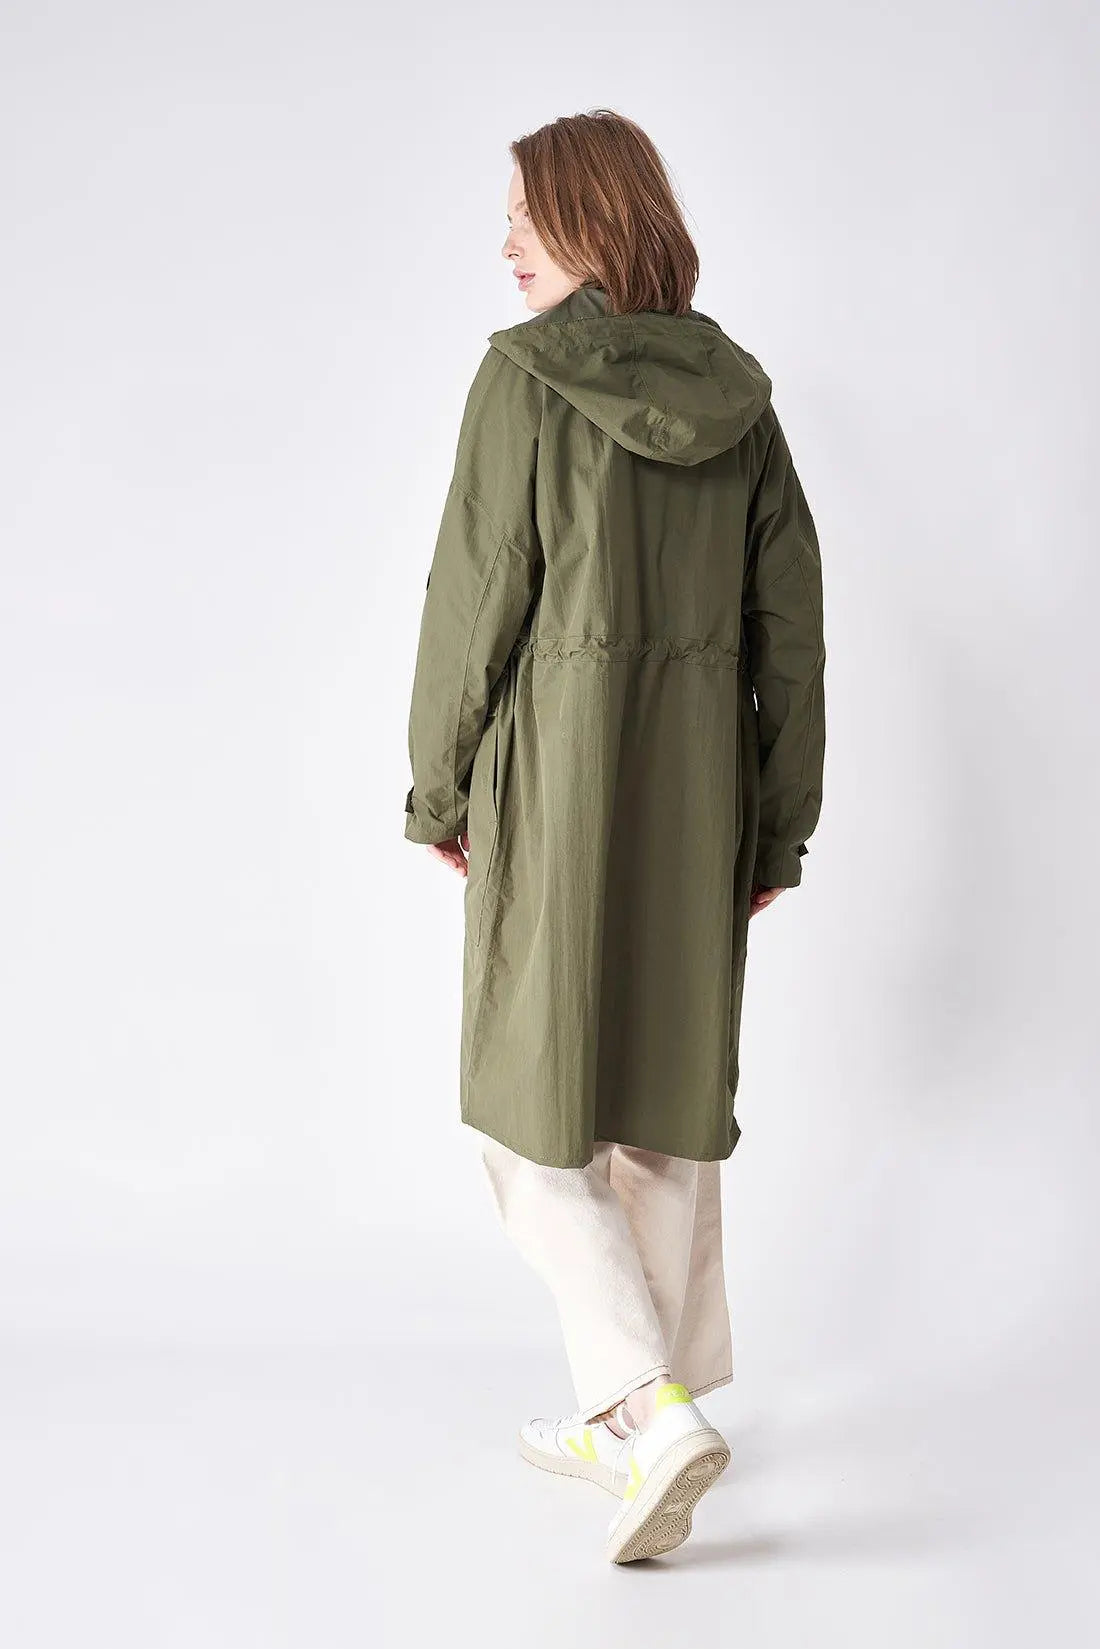 Hymmel - Chubasquero o chaqueta Ligero de Mujer – Rainwear